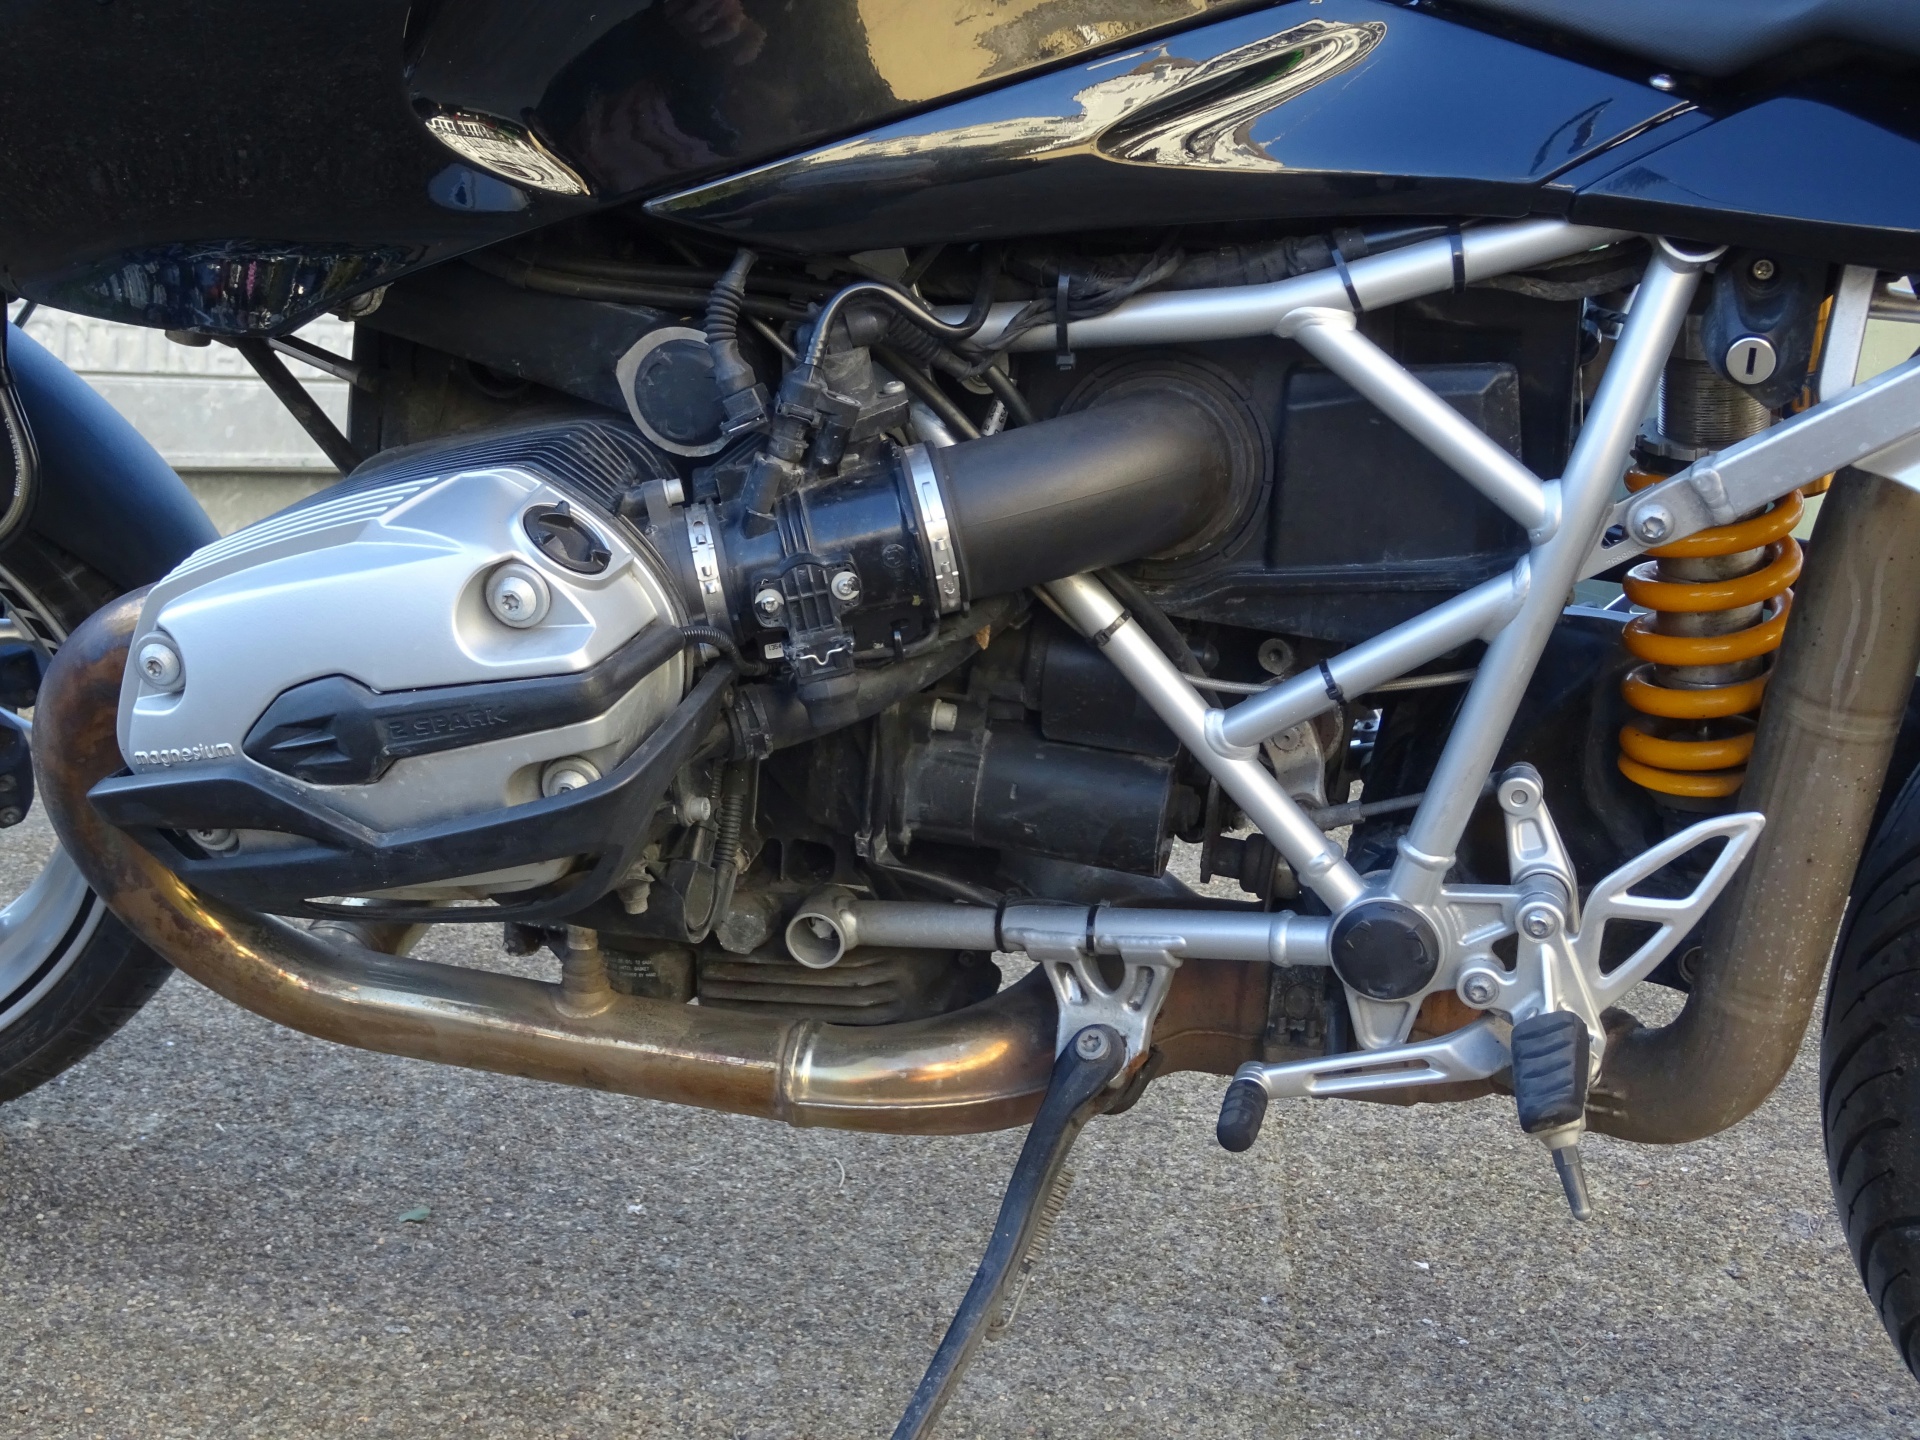 BMW R1200S moto motore sinistro